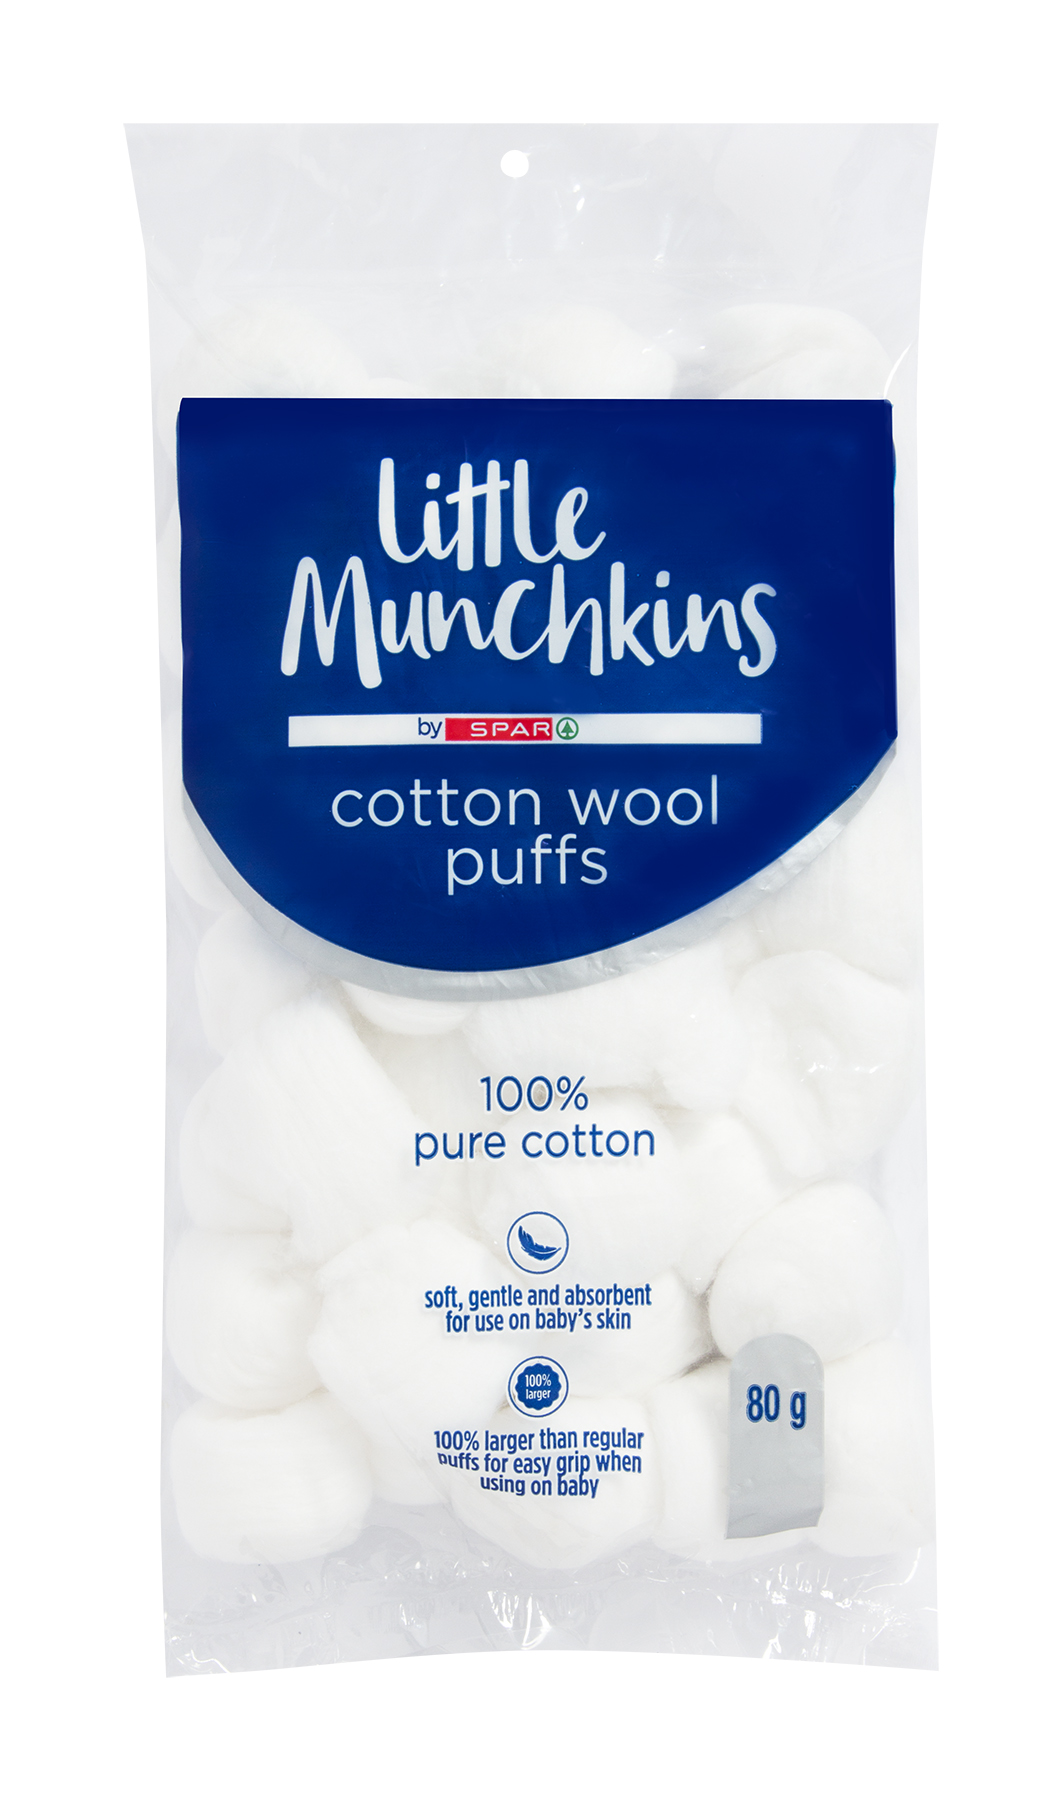 little munchkins by spar cotton wool puffs